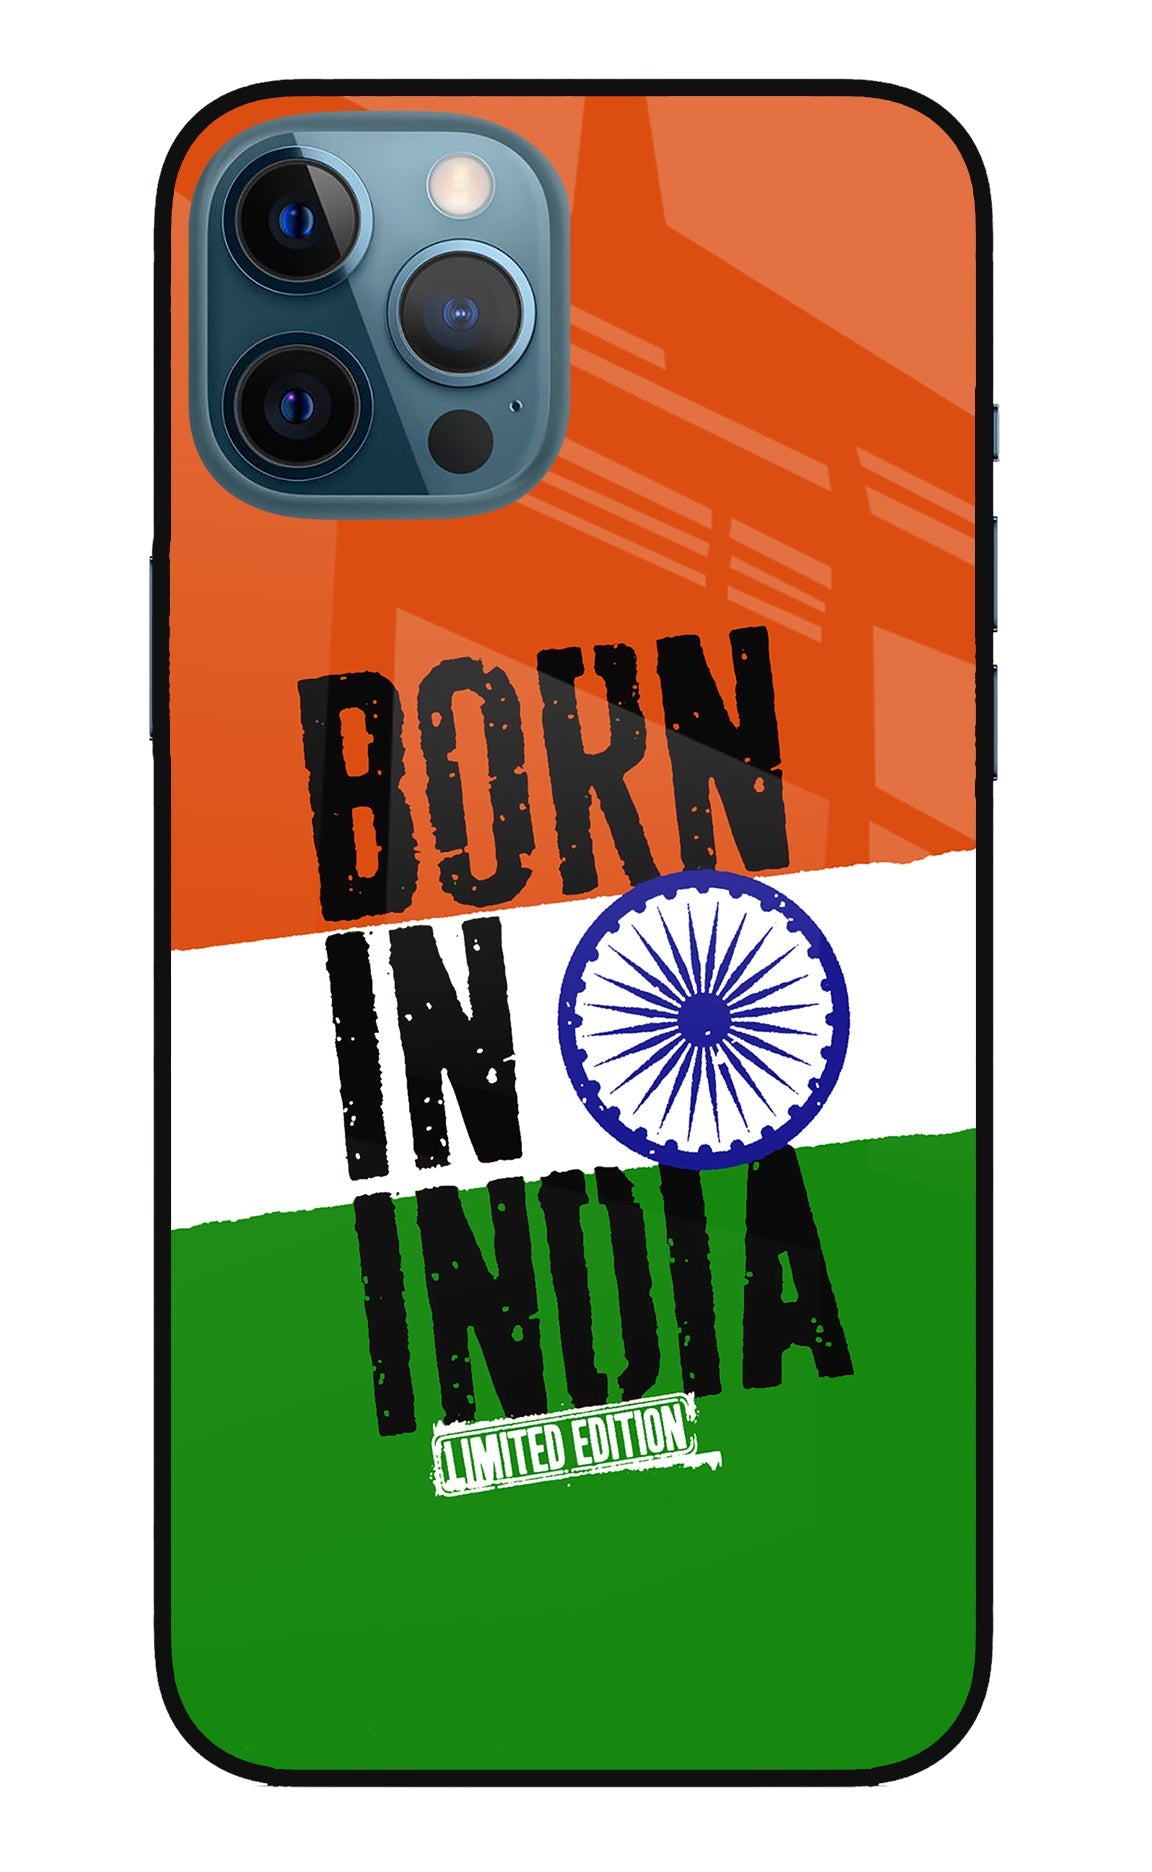 Born in India iPhone 12 Pro Max Glass Case